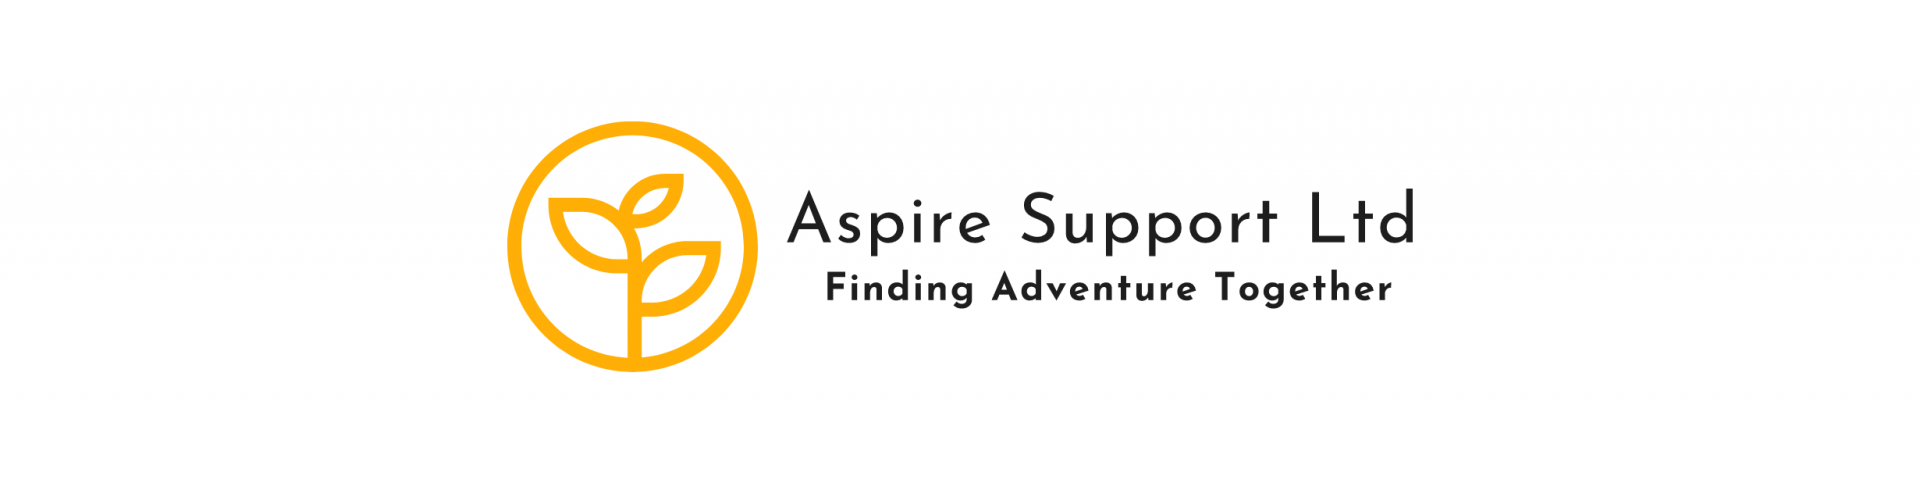 Aspire Support